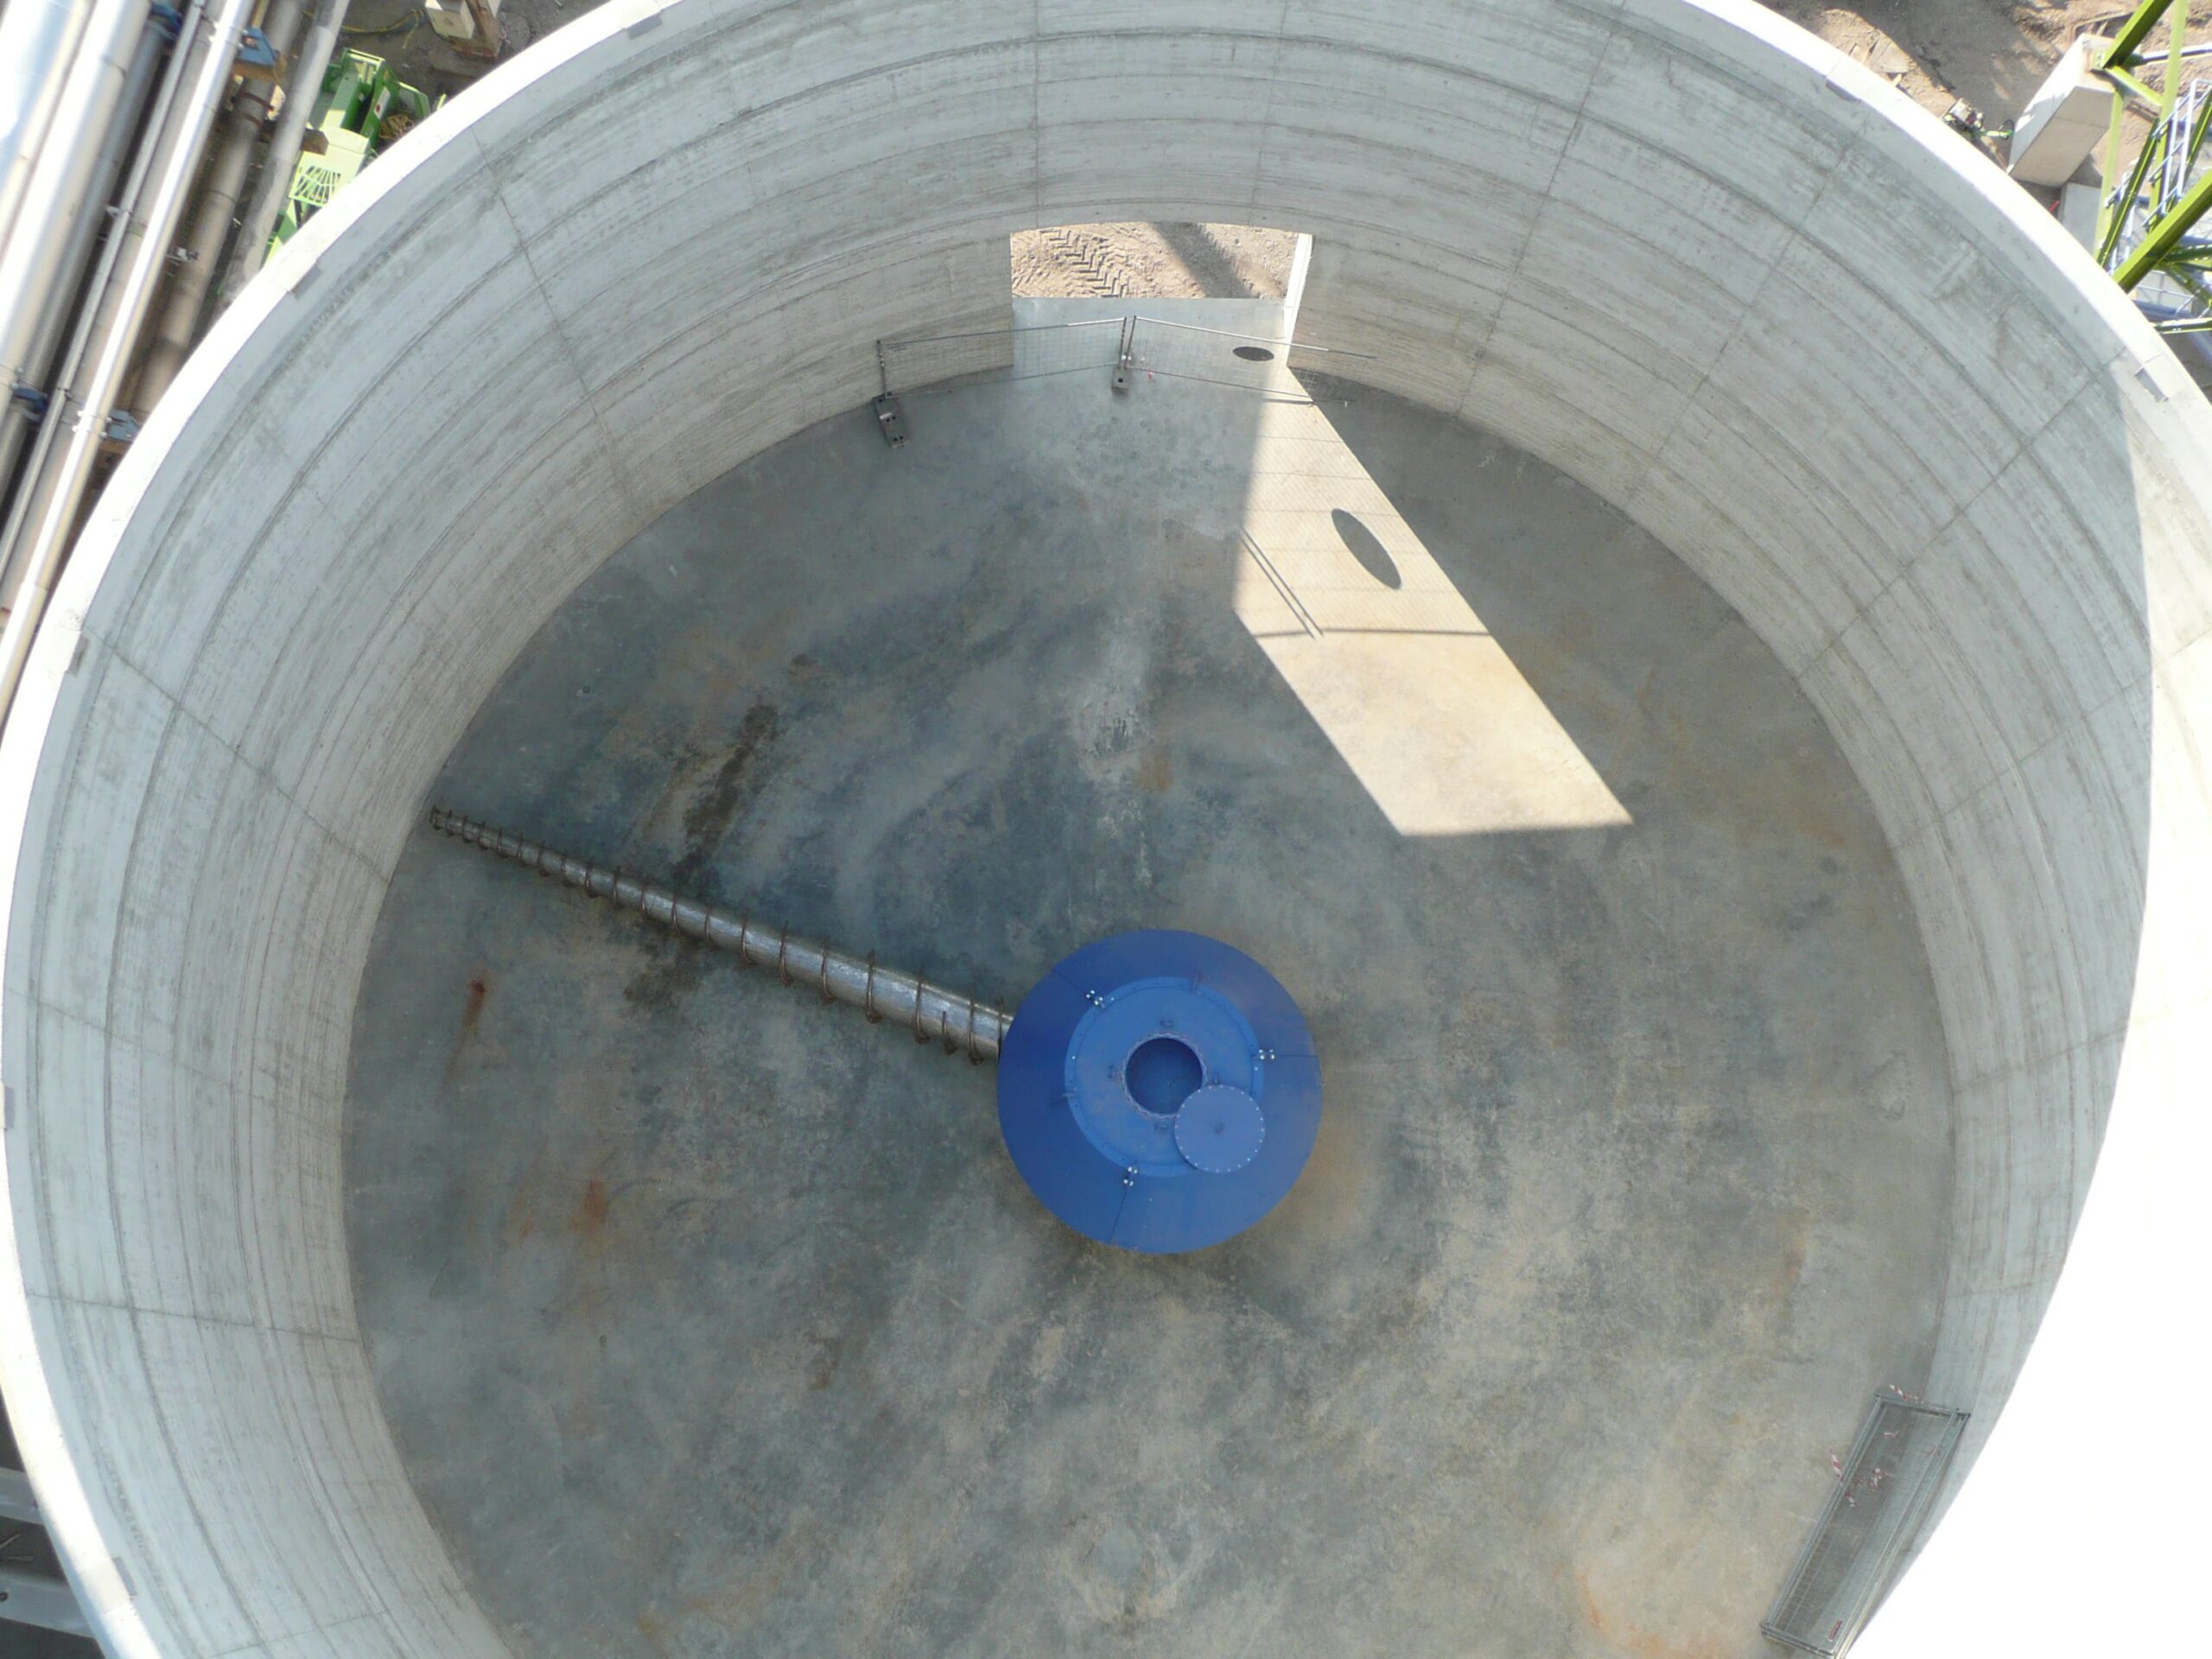 FMW Round-Silo discharge system with a round silo discharge screw from FMW in-hous screw production